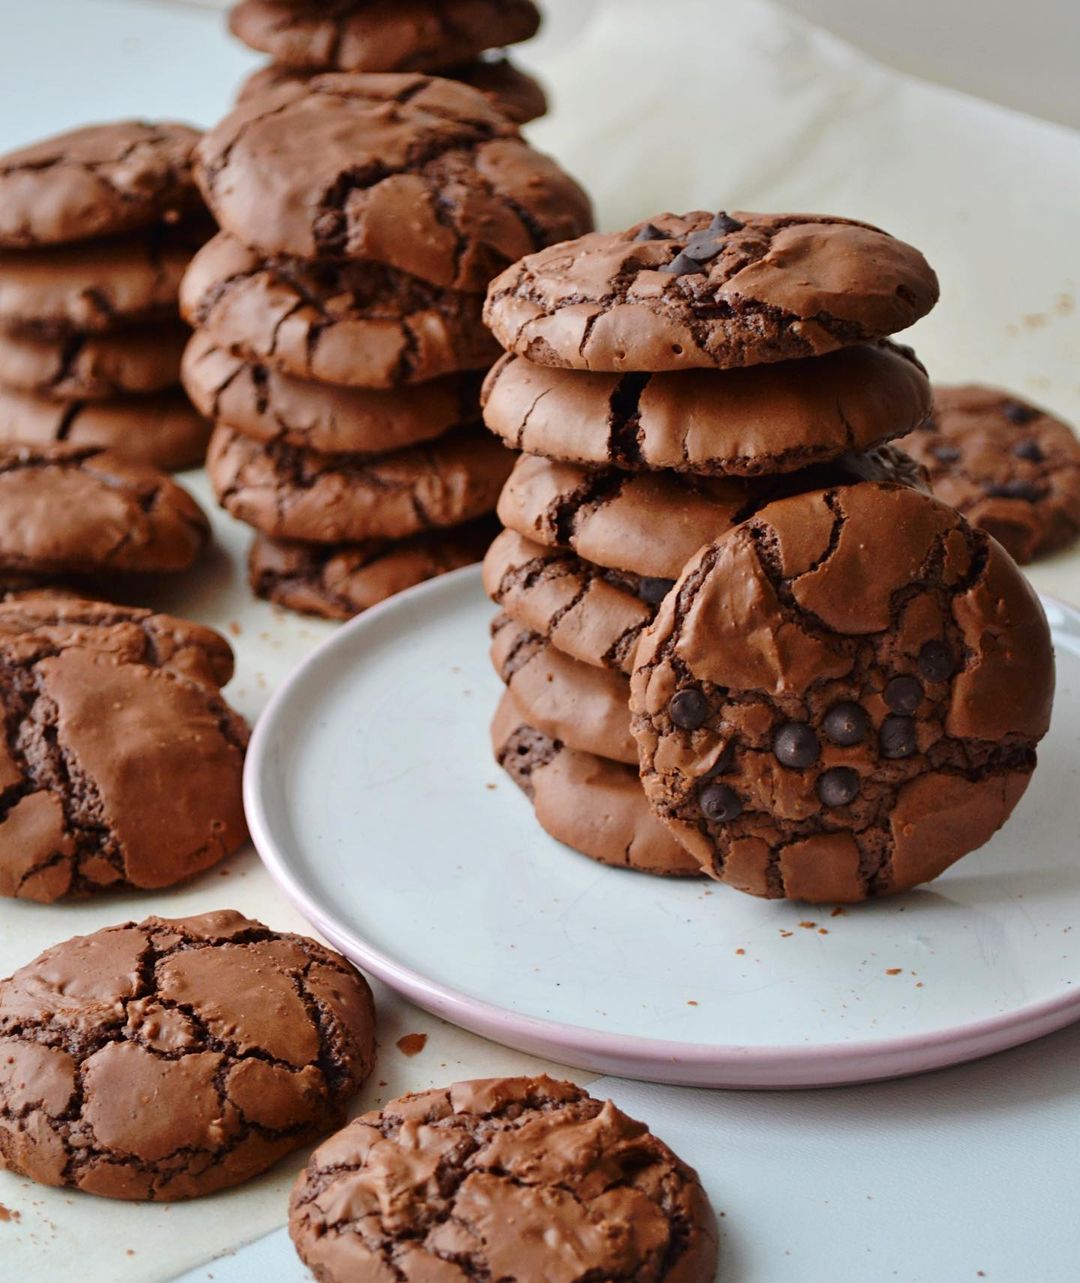 Yummy chocolate cookies